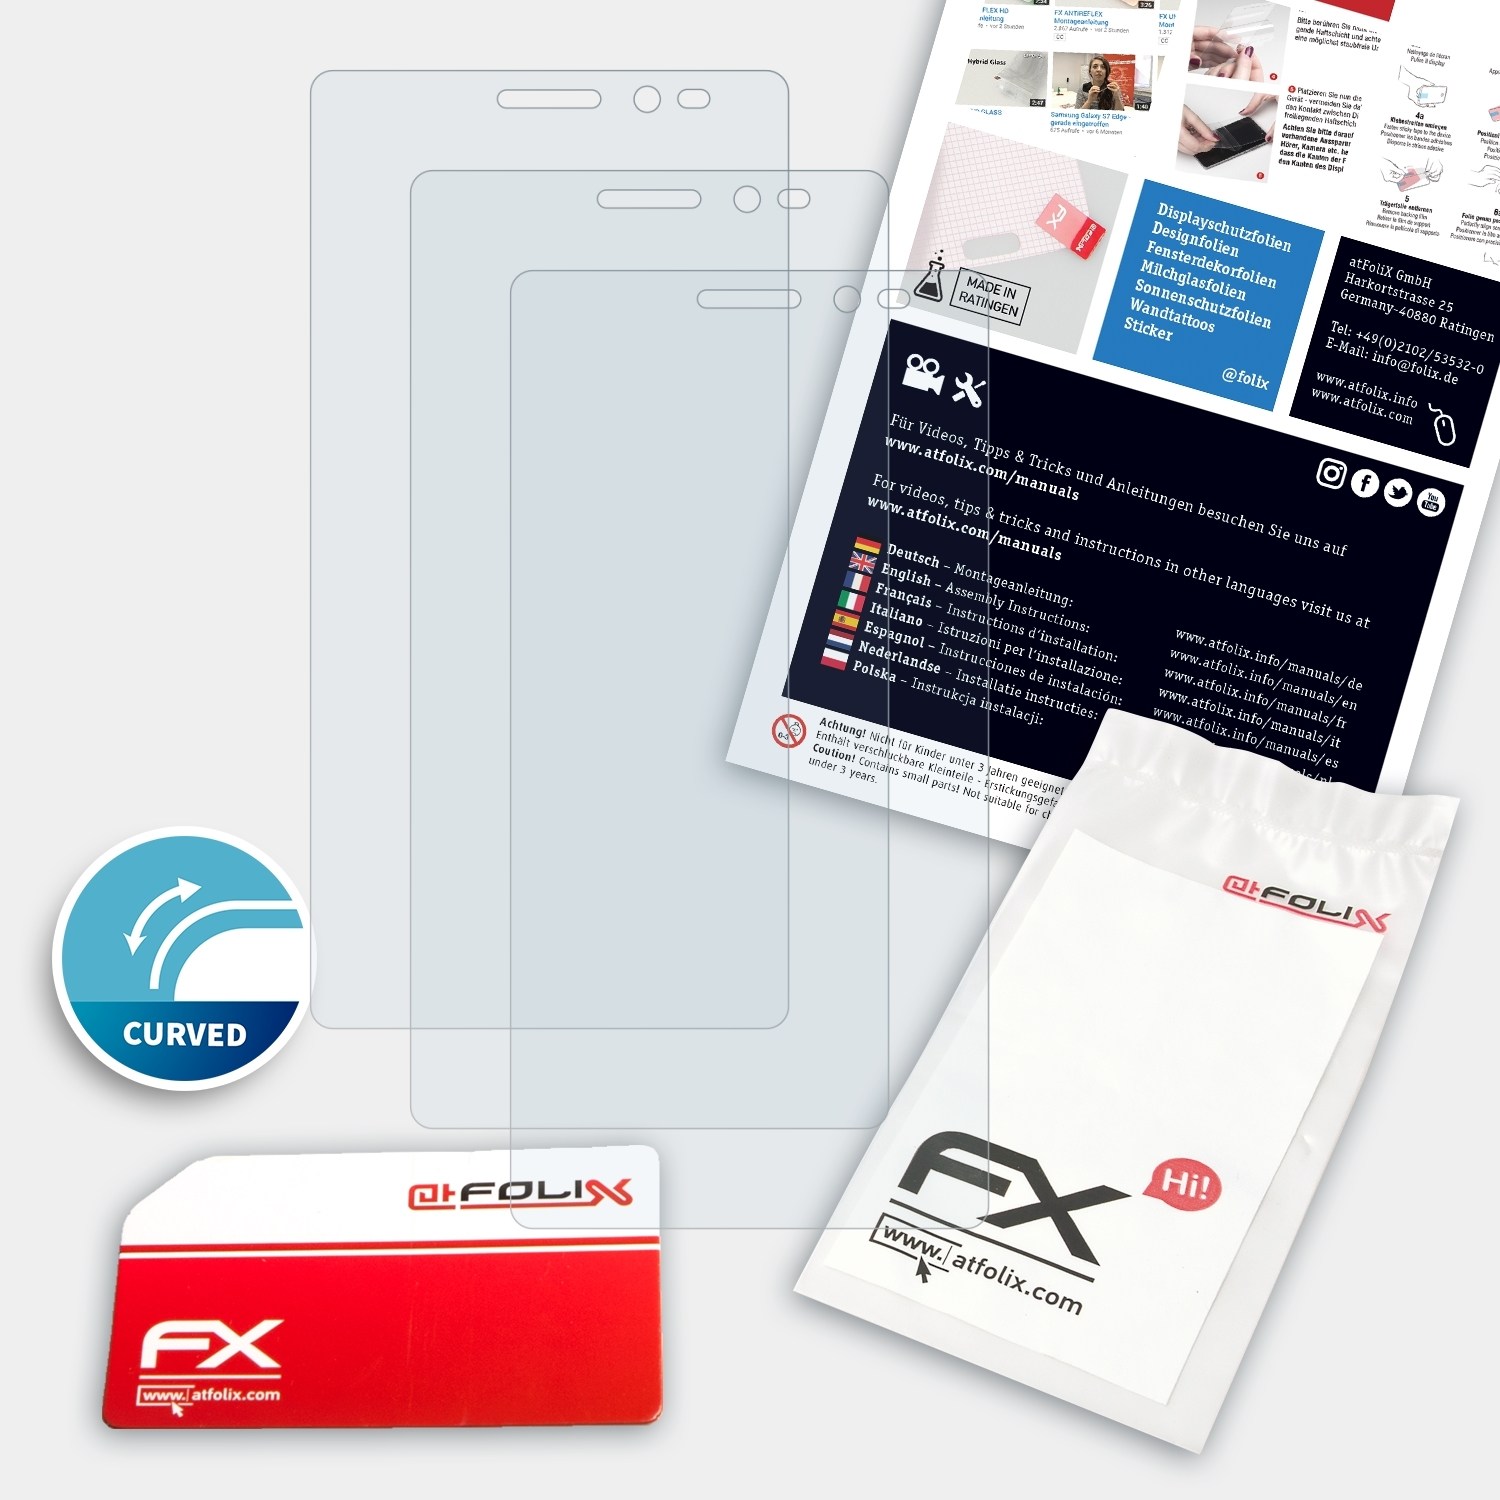 2 Lenovo 3x Phab Plus) FX-ActiFleX ATFOLIX Displayschutz(für